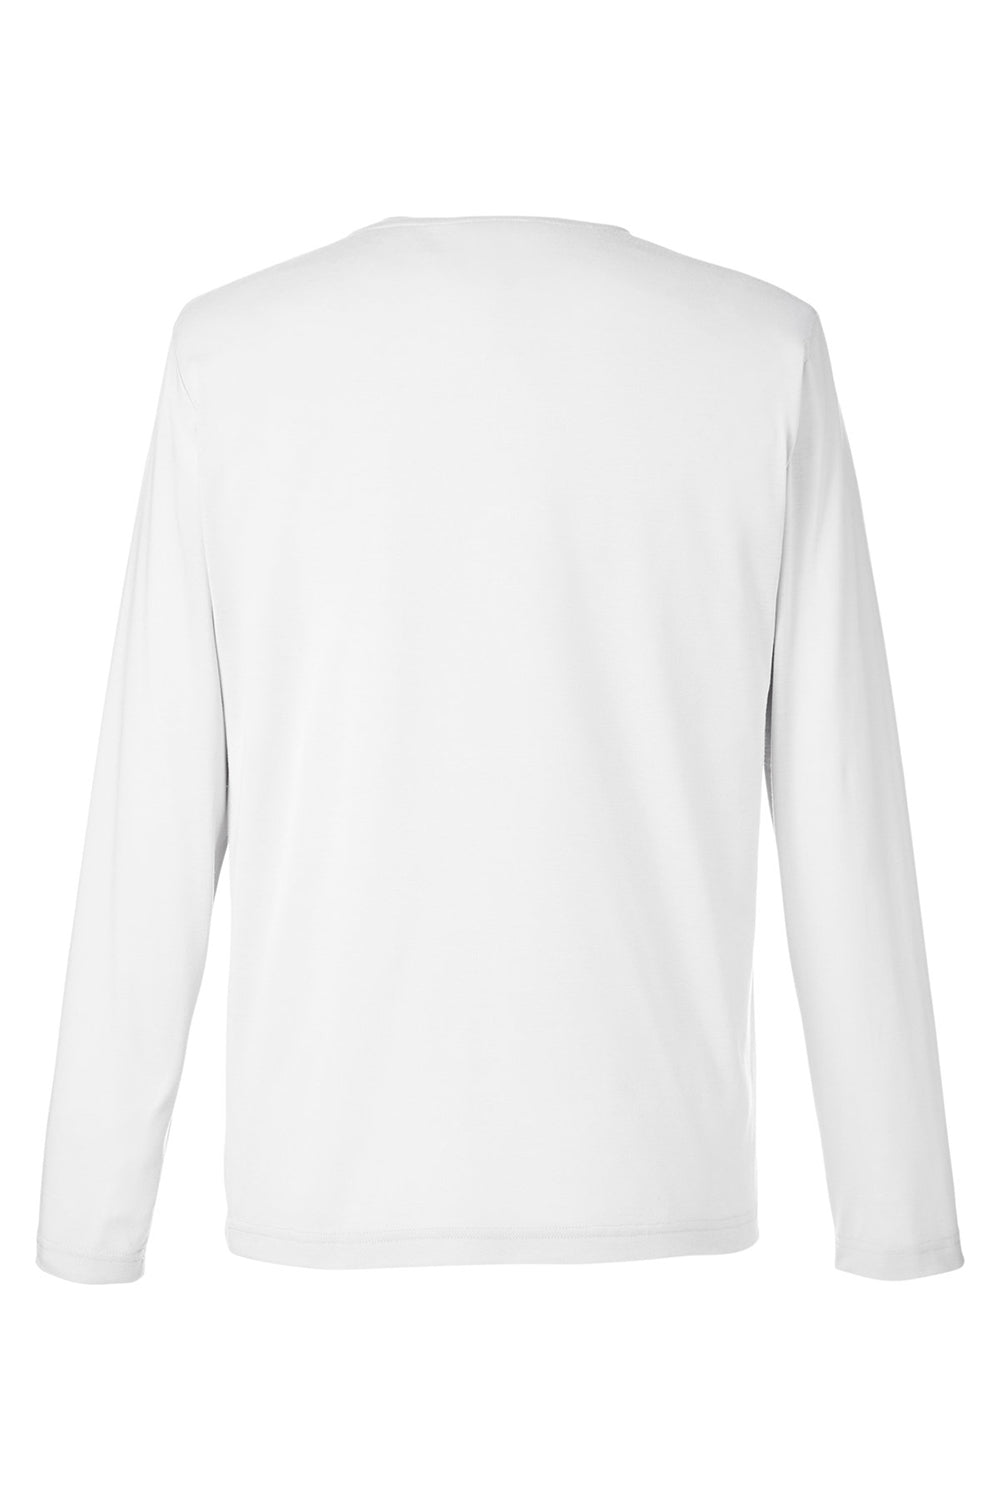 Core 365 CE111L Mens Fusion ChromaSoft Performance Moisture Wicking Long Sleeve Crewneck T-Shirt White Flat Back